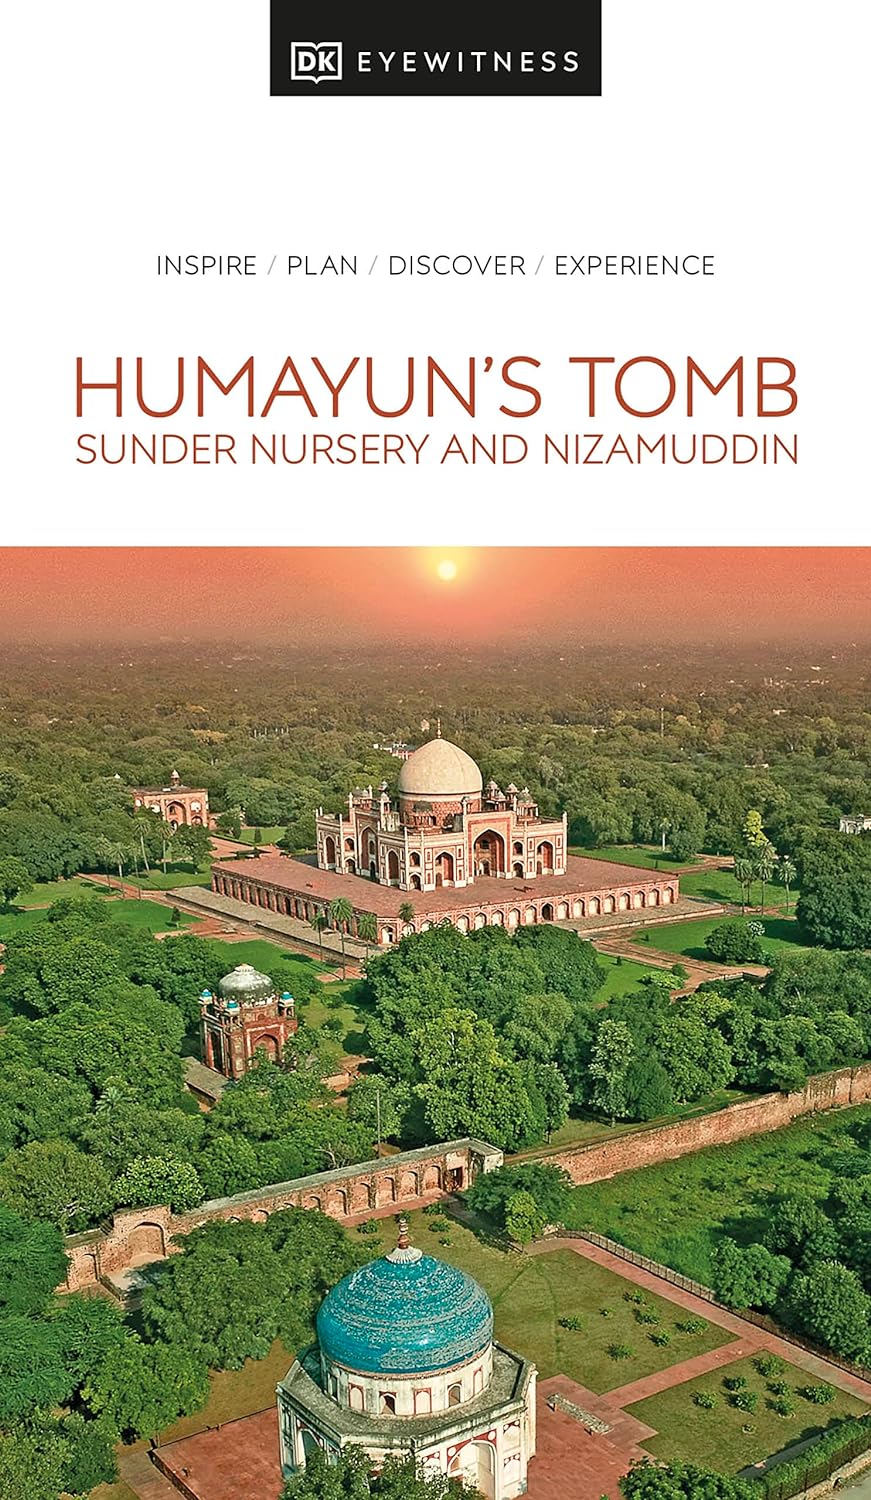 DK Eyewitness Humayun's Tomb, Sunder Nursery and Nizamuddin